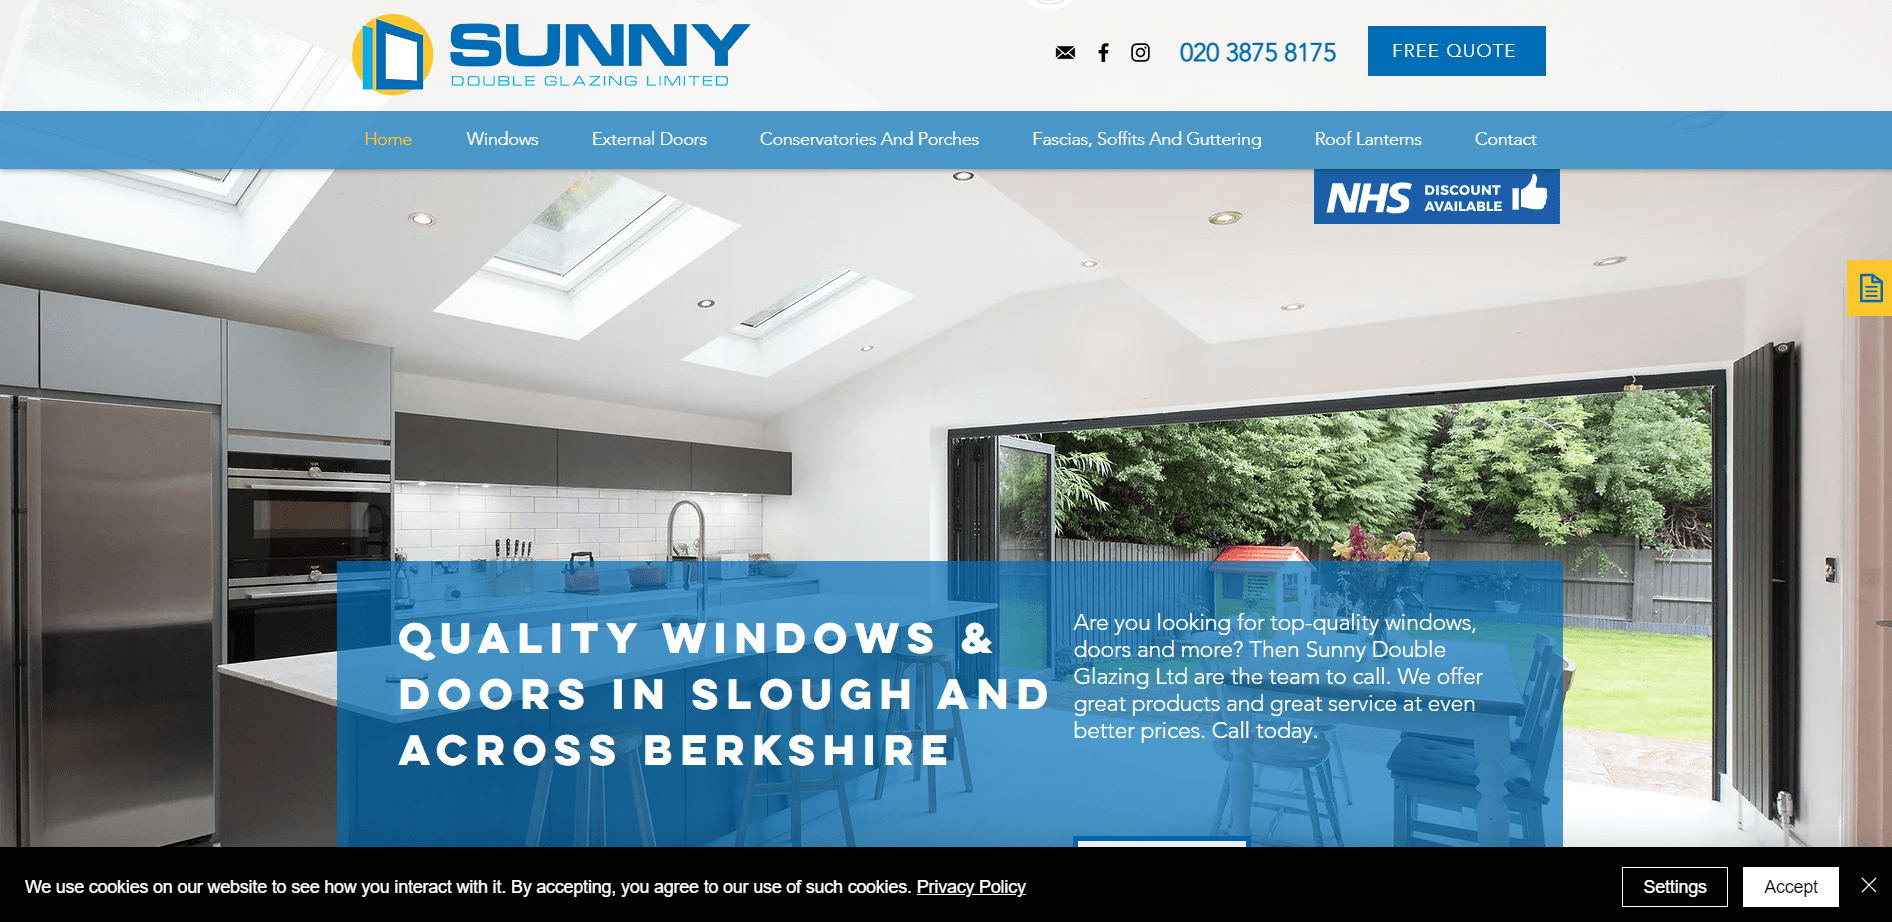 Sunny Double Glazing Ltd